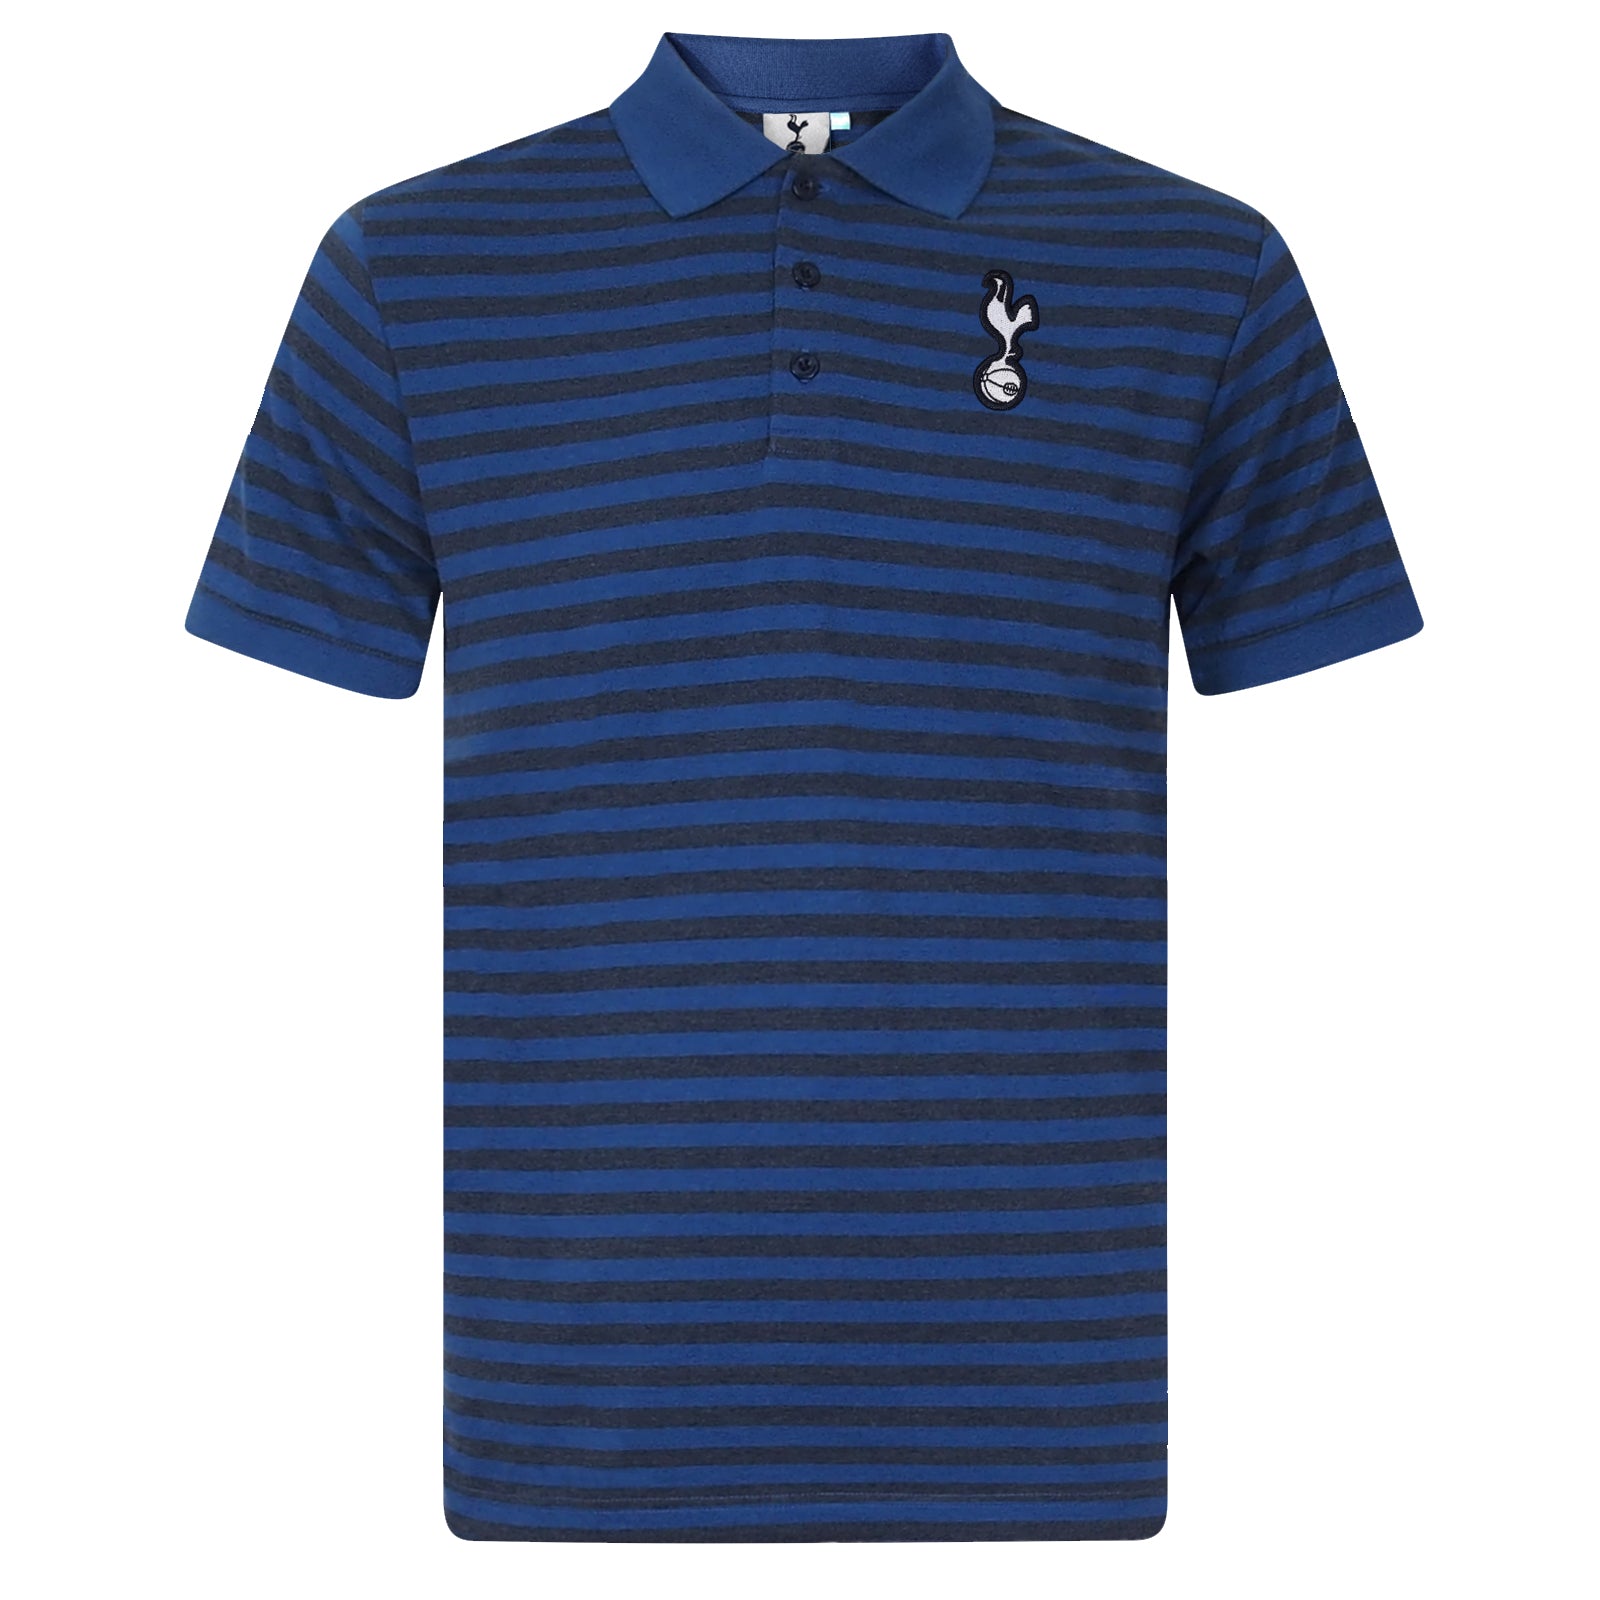 Tottenham Hotspur FC Mens Polo Shirt Striped